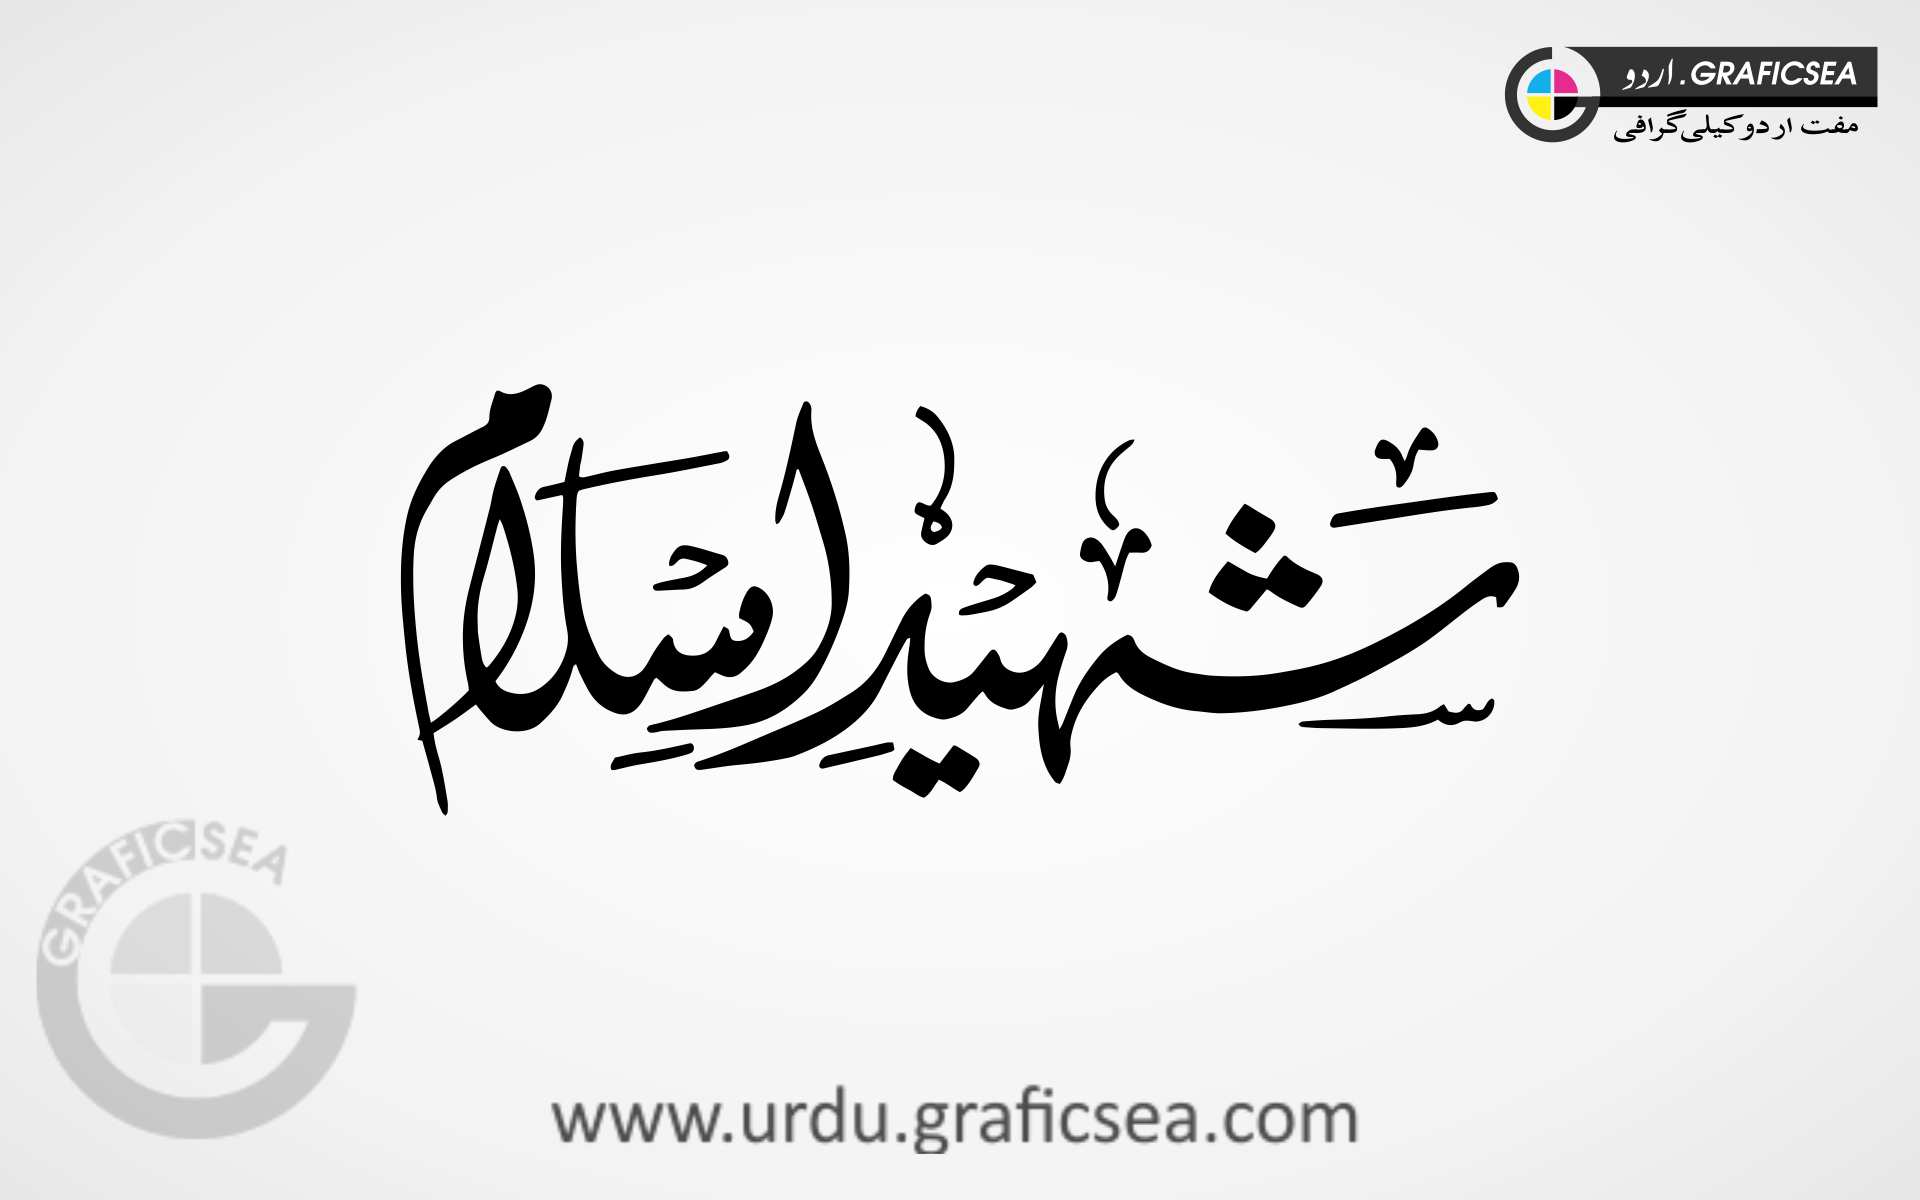 Shaheed ul Islam Word Urdu Calligraphy